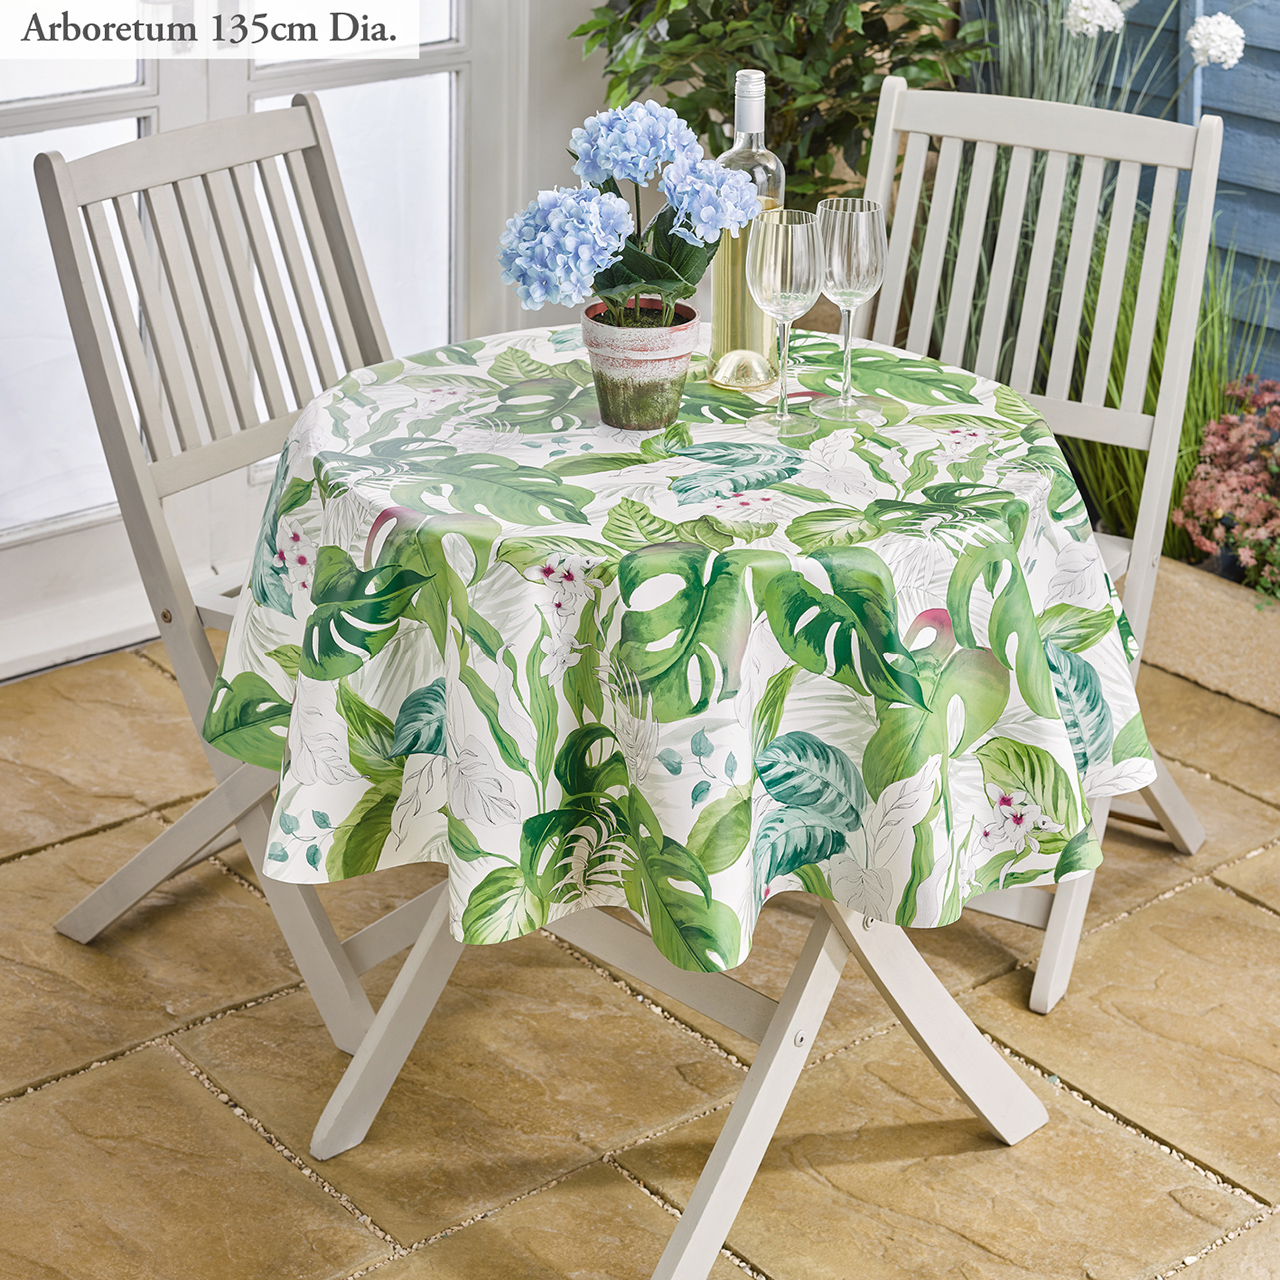 Outdoor PVC Tablecloths